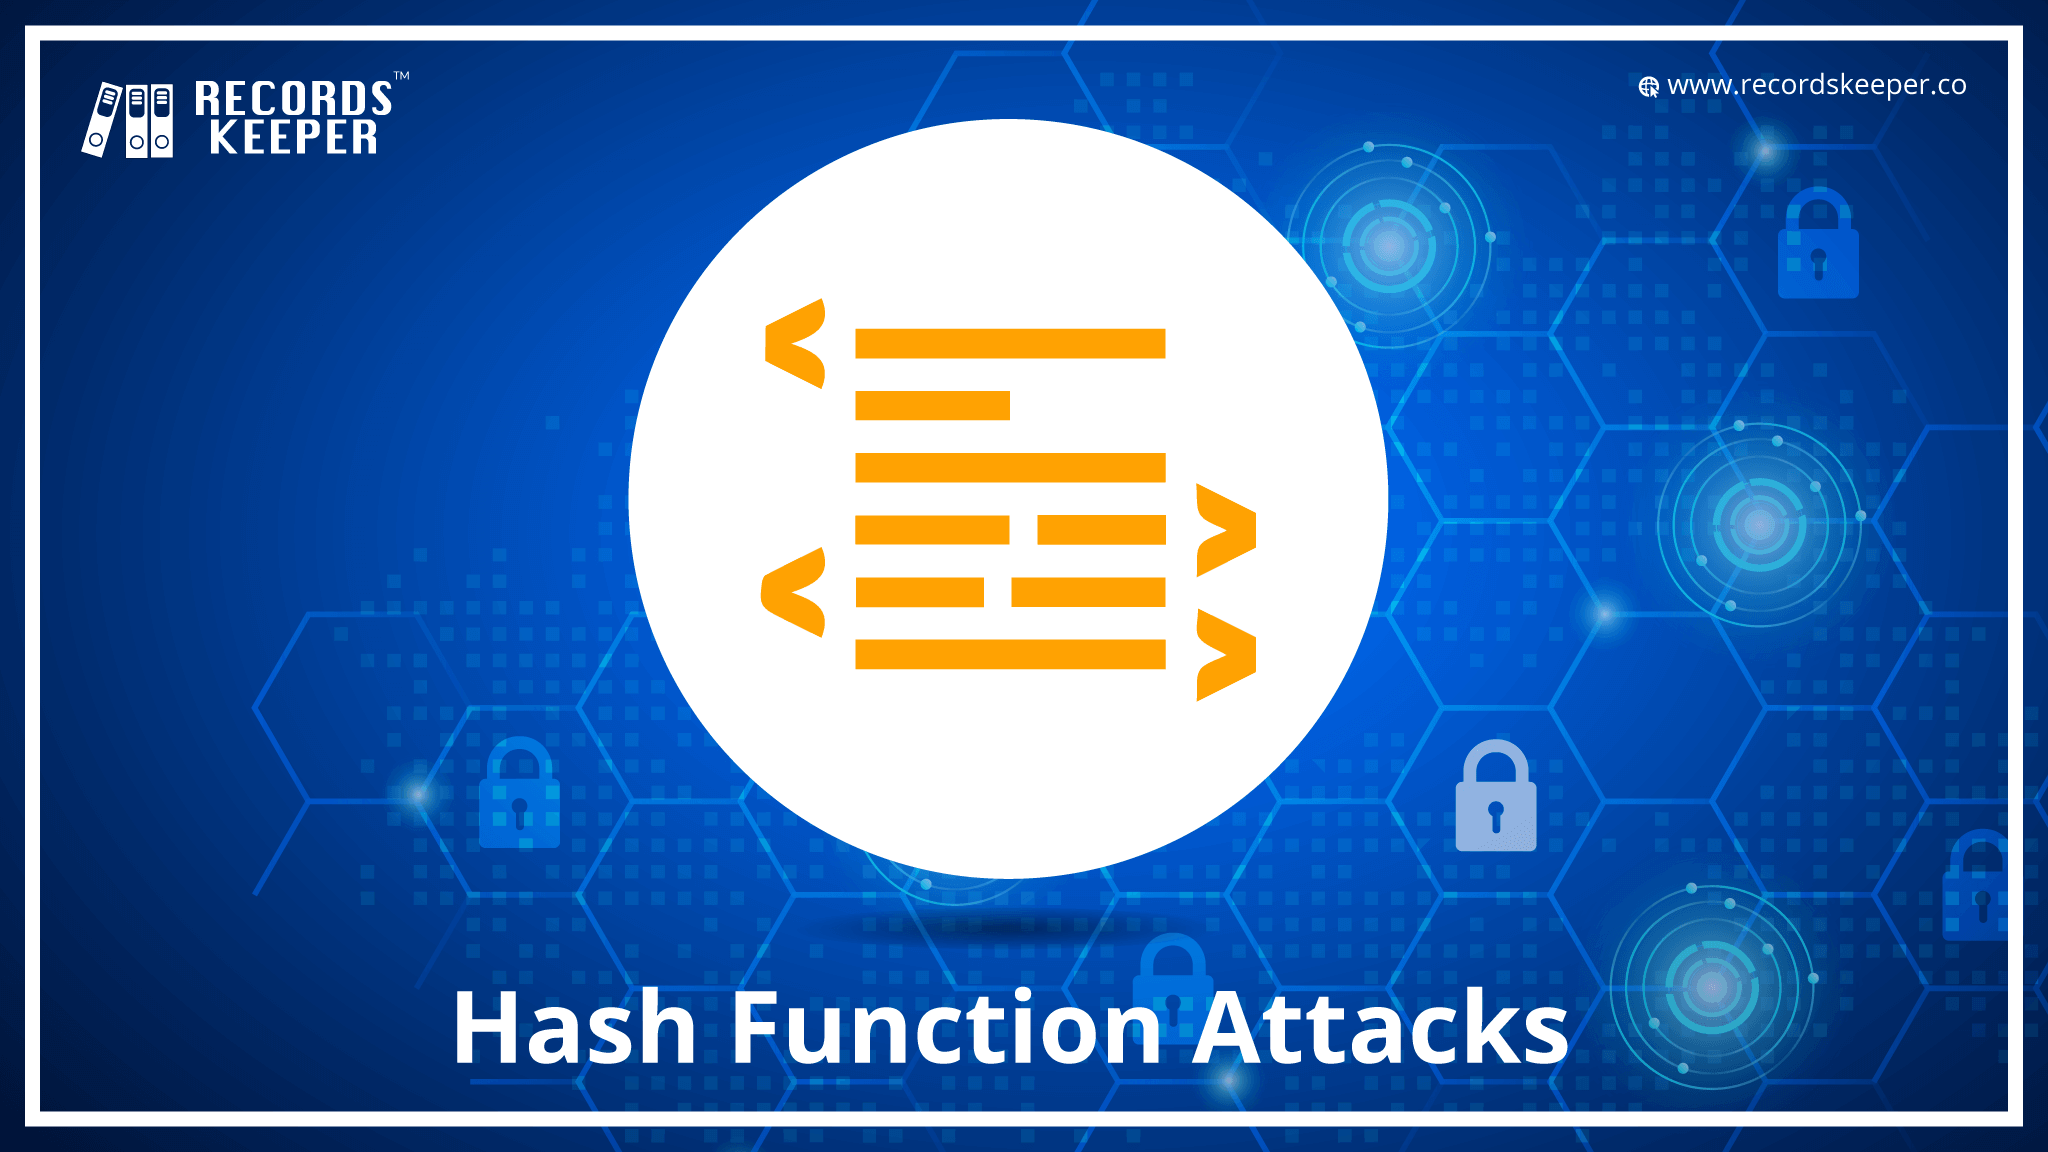 Hash Function attacks